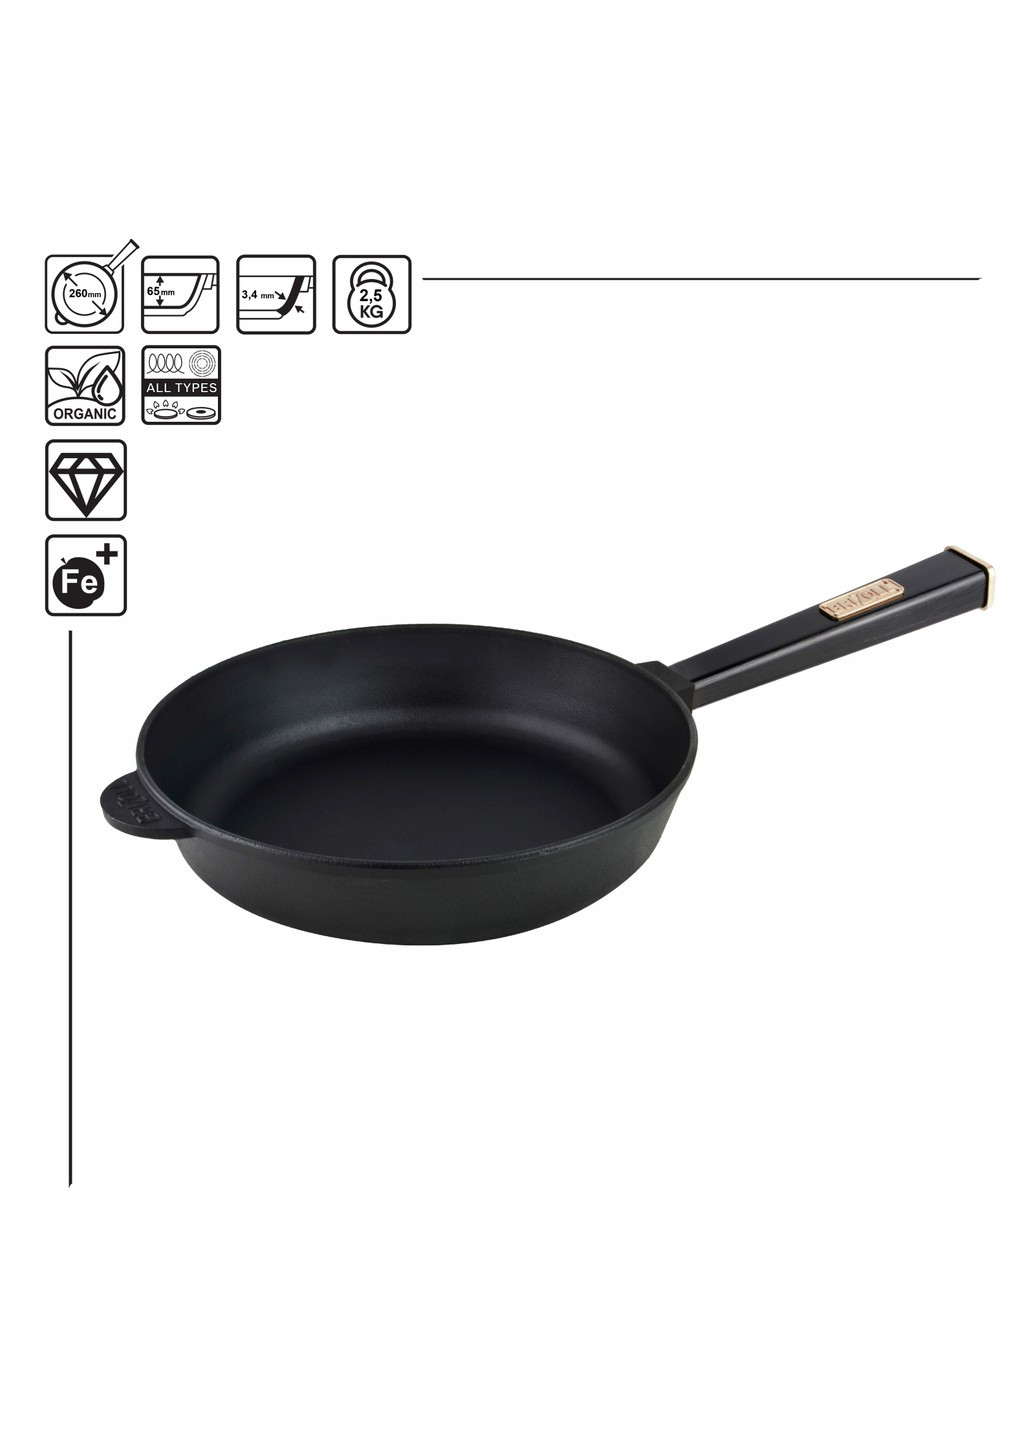 Чугунная сковорода Optima-Black 260 х 60 мм Brizoll (255190776)